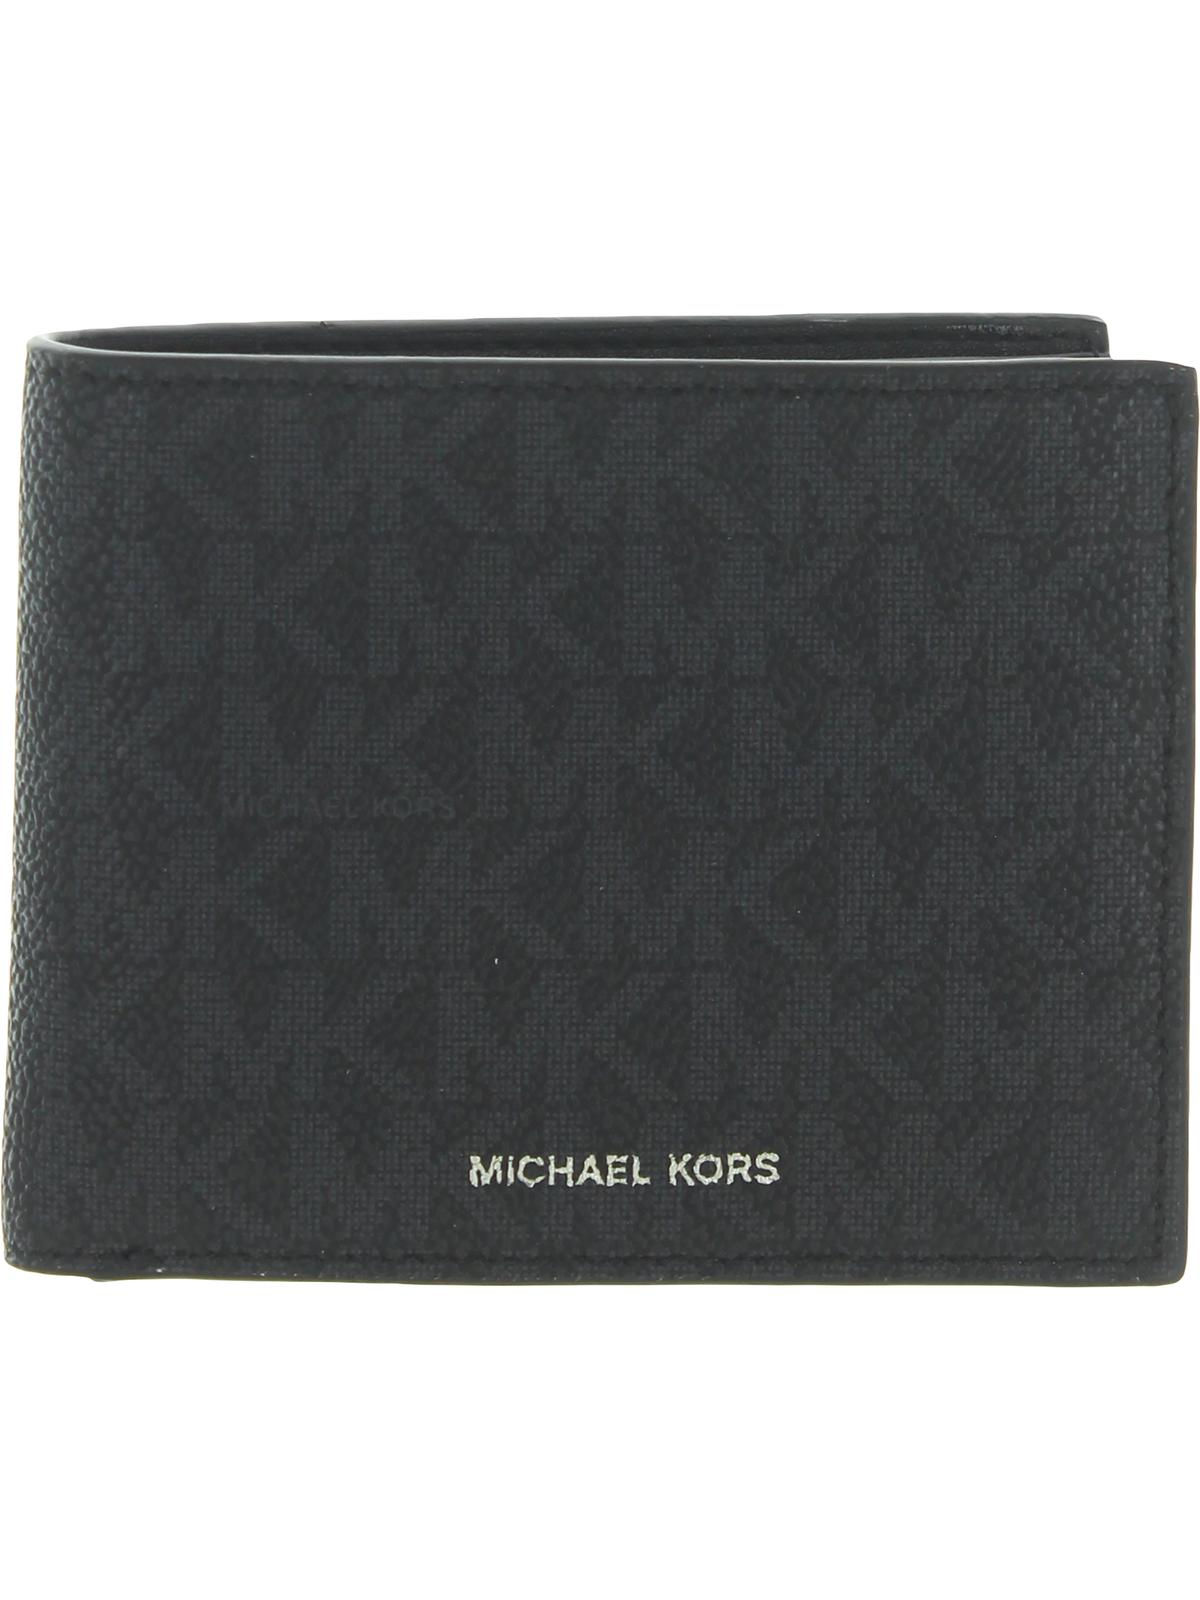 Michael Kors 'Jet Set' Men's Graphic Bi-Fold Wallet 2-Fold (Black) - image 1 of 2